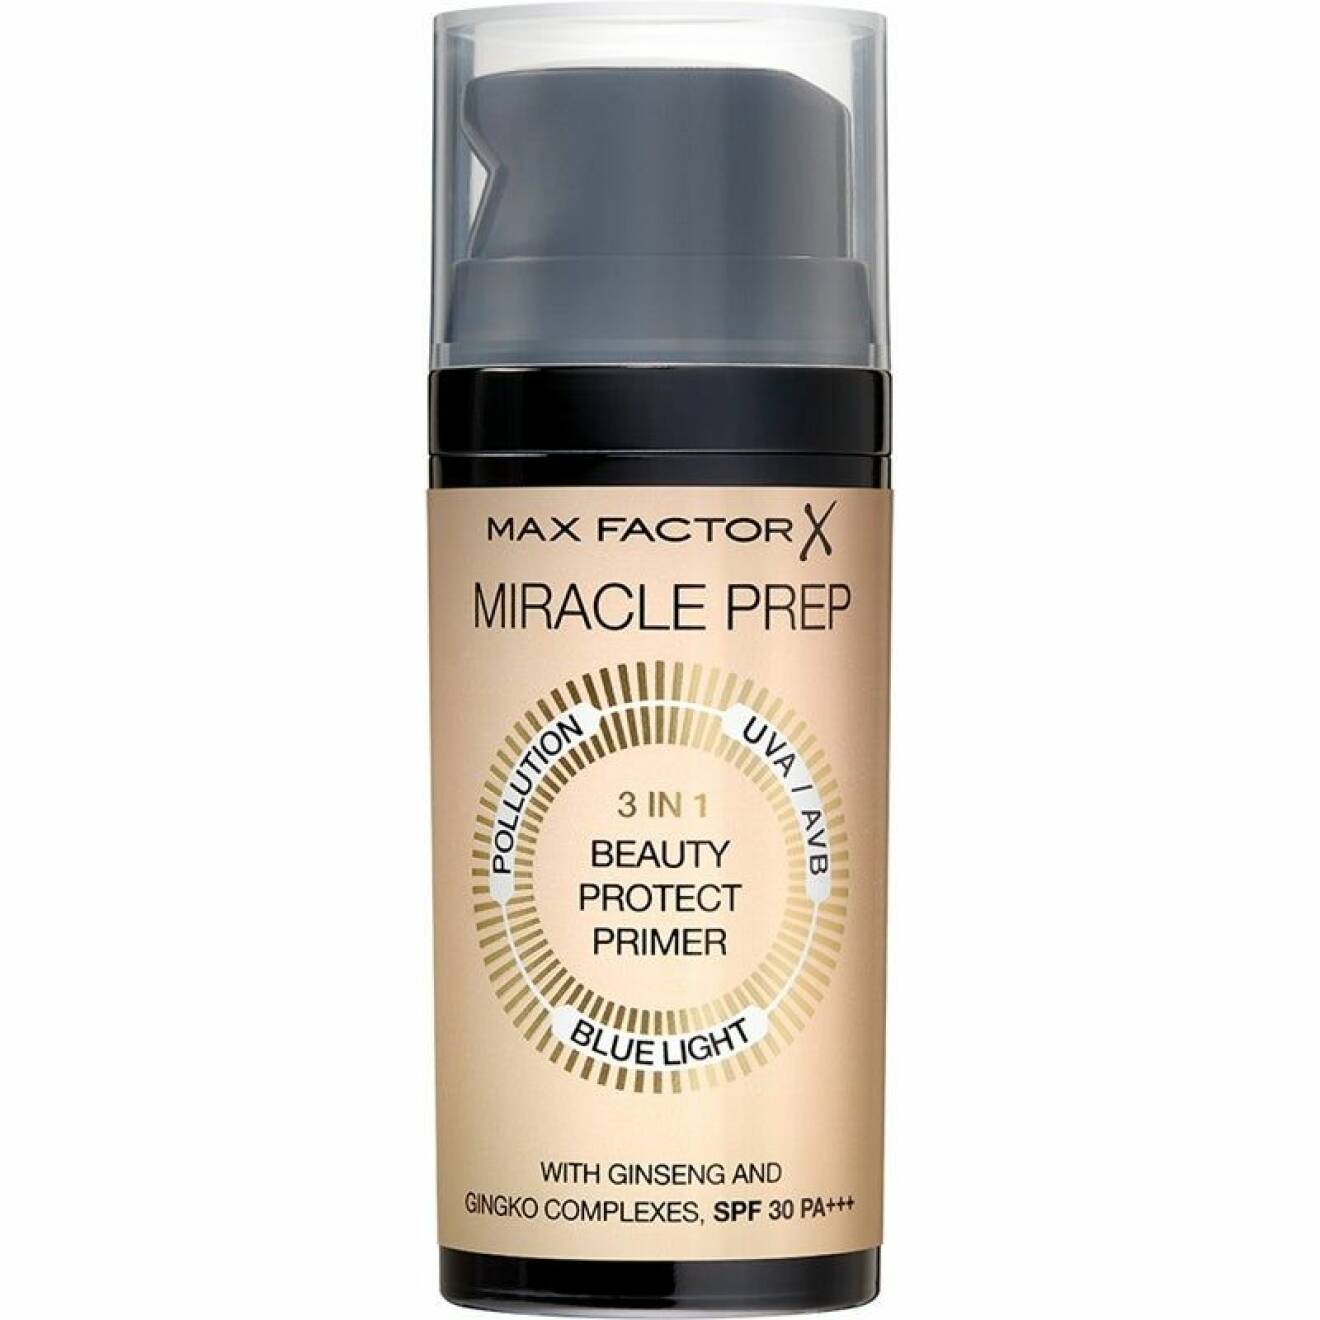 Miracle prep beauty protect primer från Max Factor.